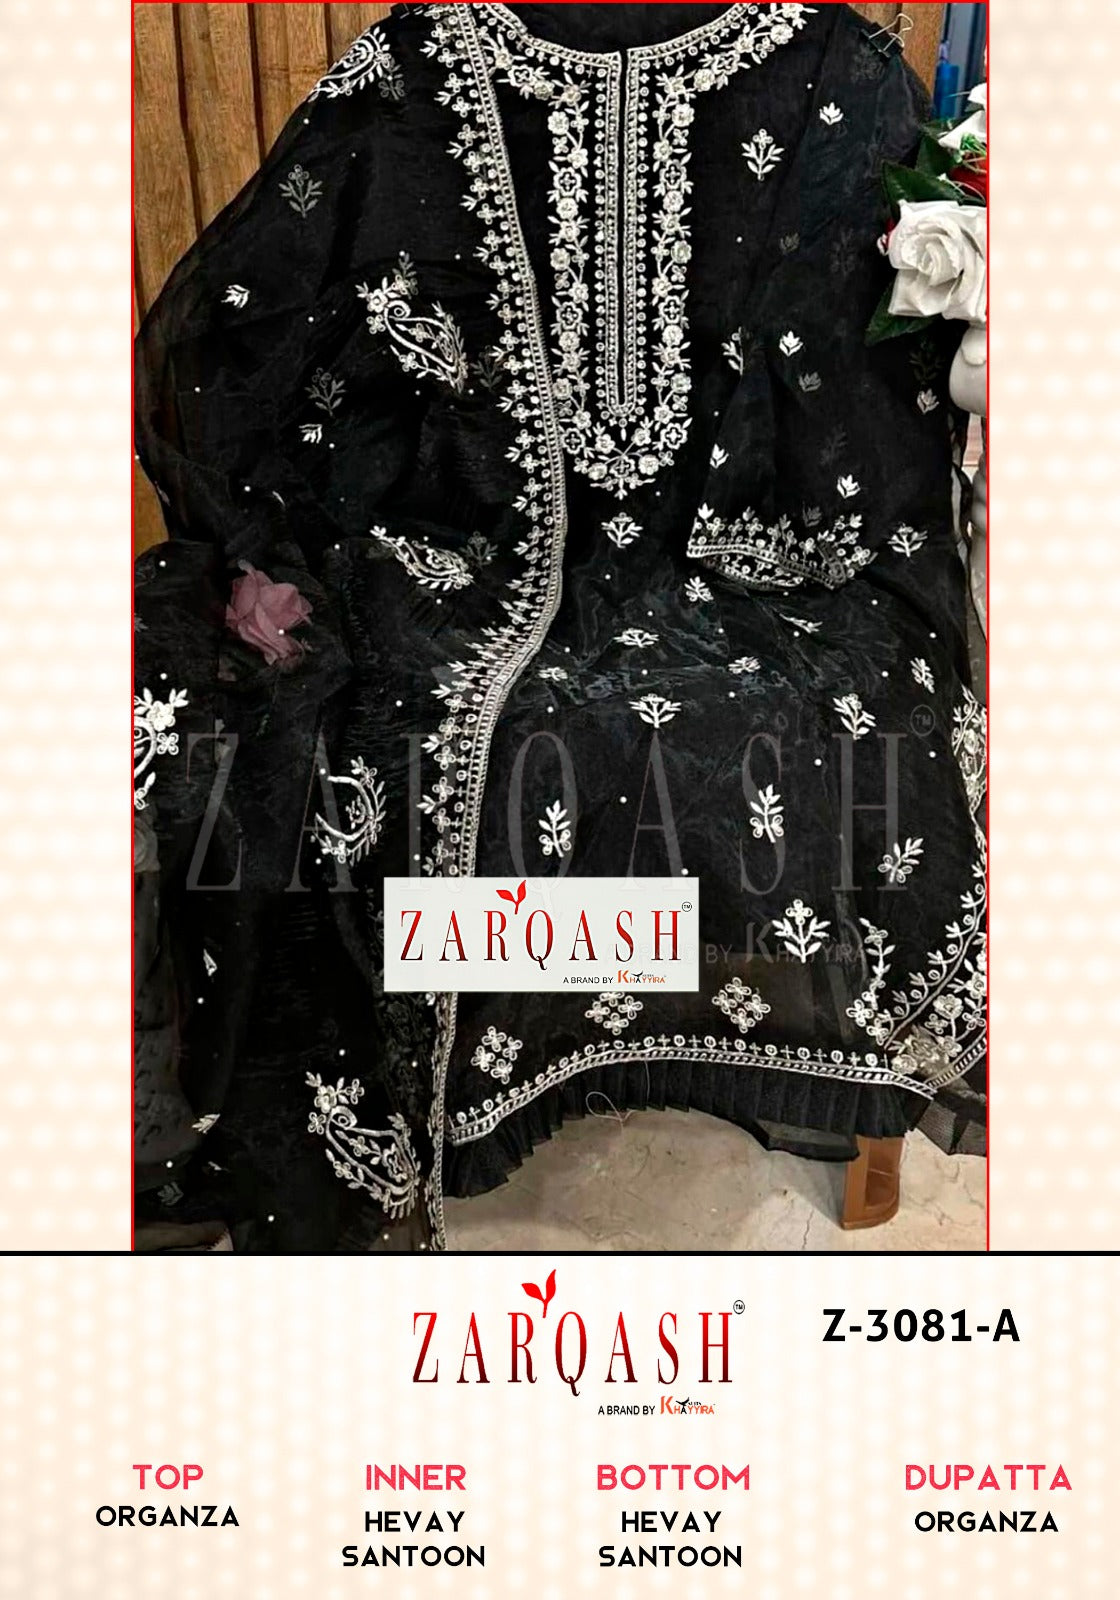 Z-3081 Zarqash Organza Pakistani Salwar Suits